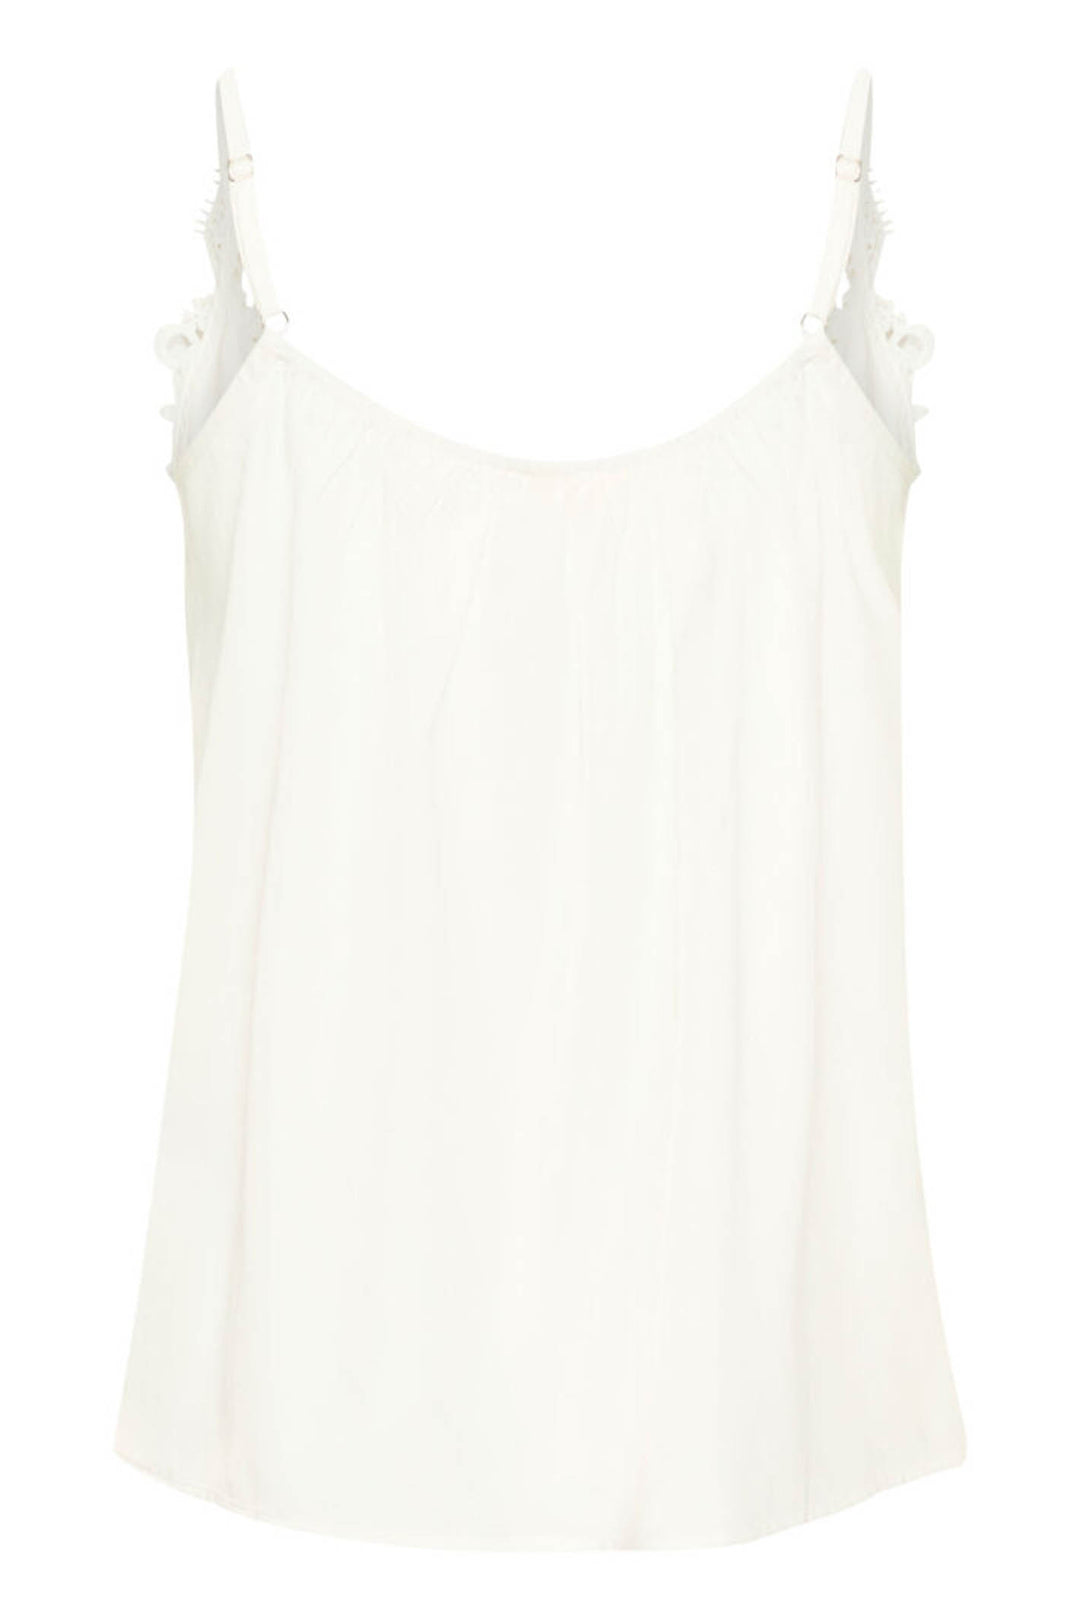 Cream CRanna snow white camisole lace top with straps dotique boutique chesterfield 1 3